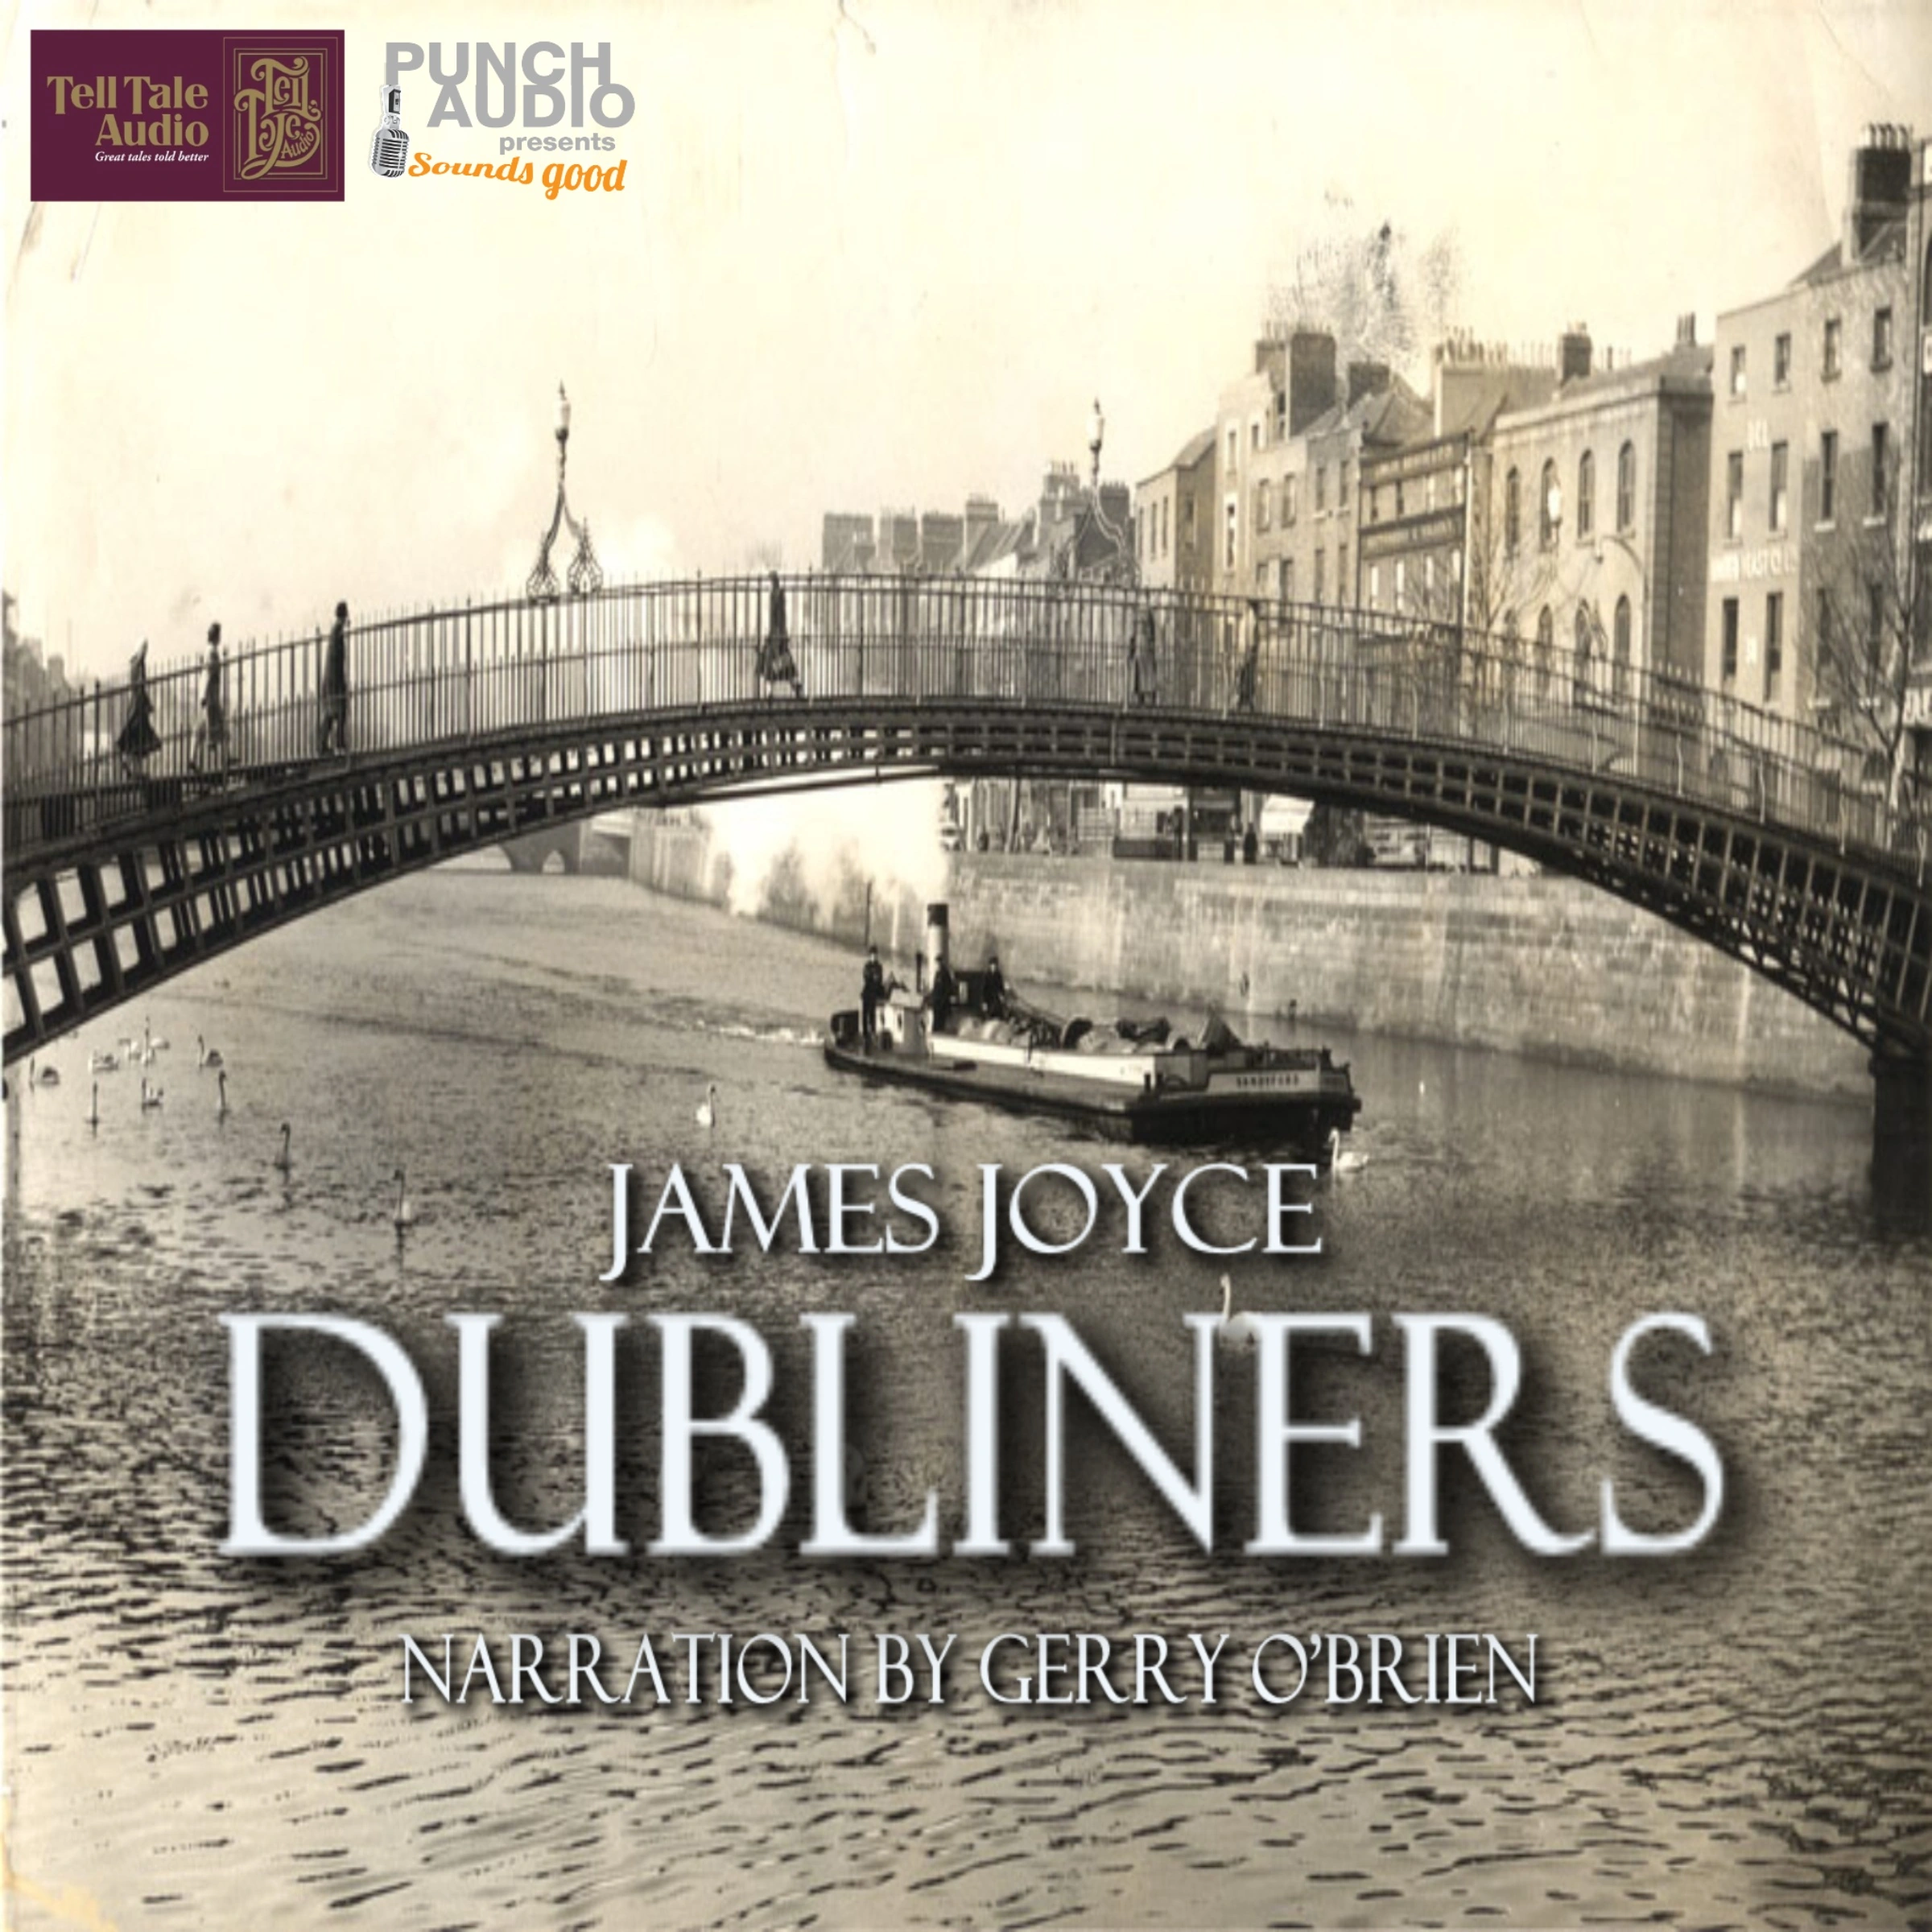 Dubliners by James Joyce Audiobook